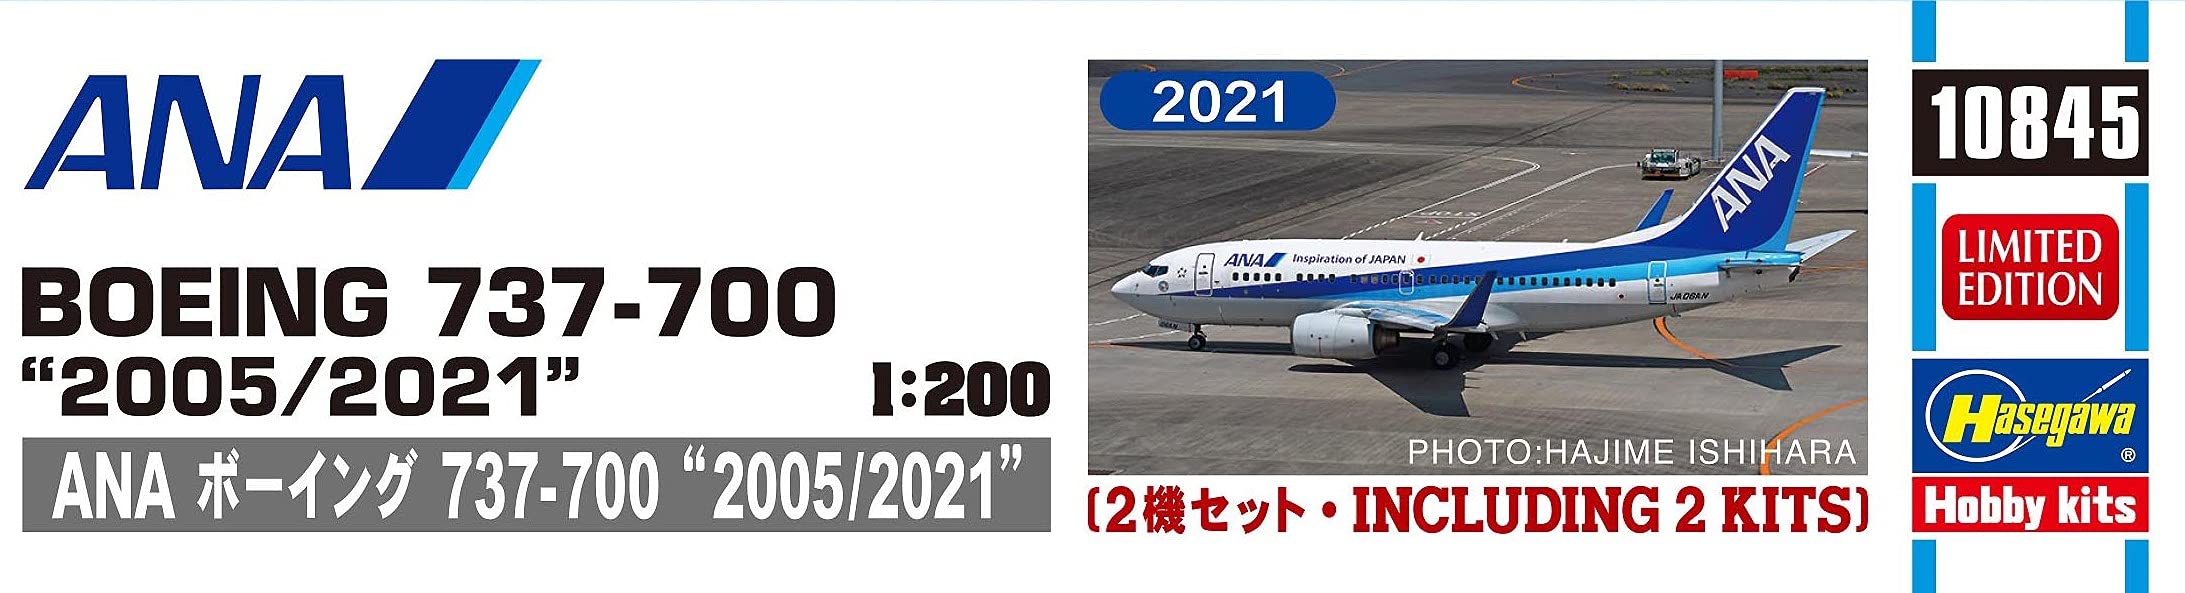 HASEGAWA 1/200 Ana Boeing 737-700 '2005/2011' Plastic Model